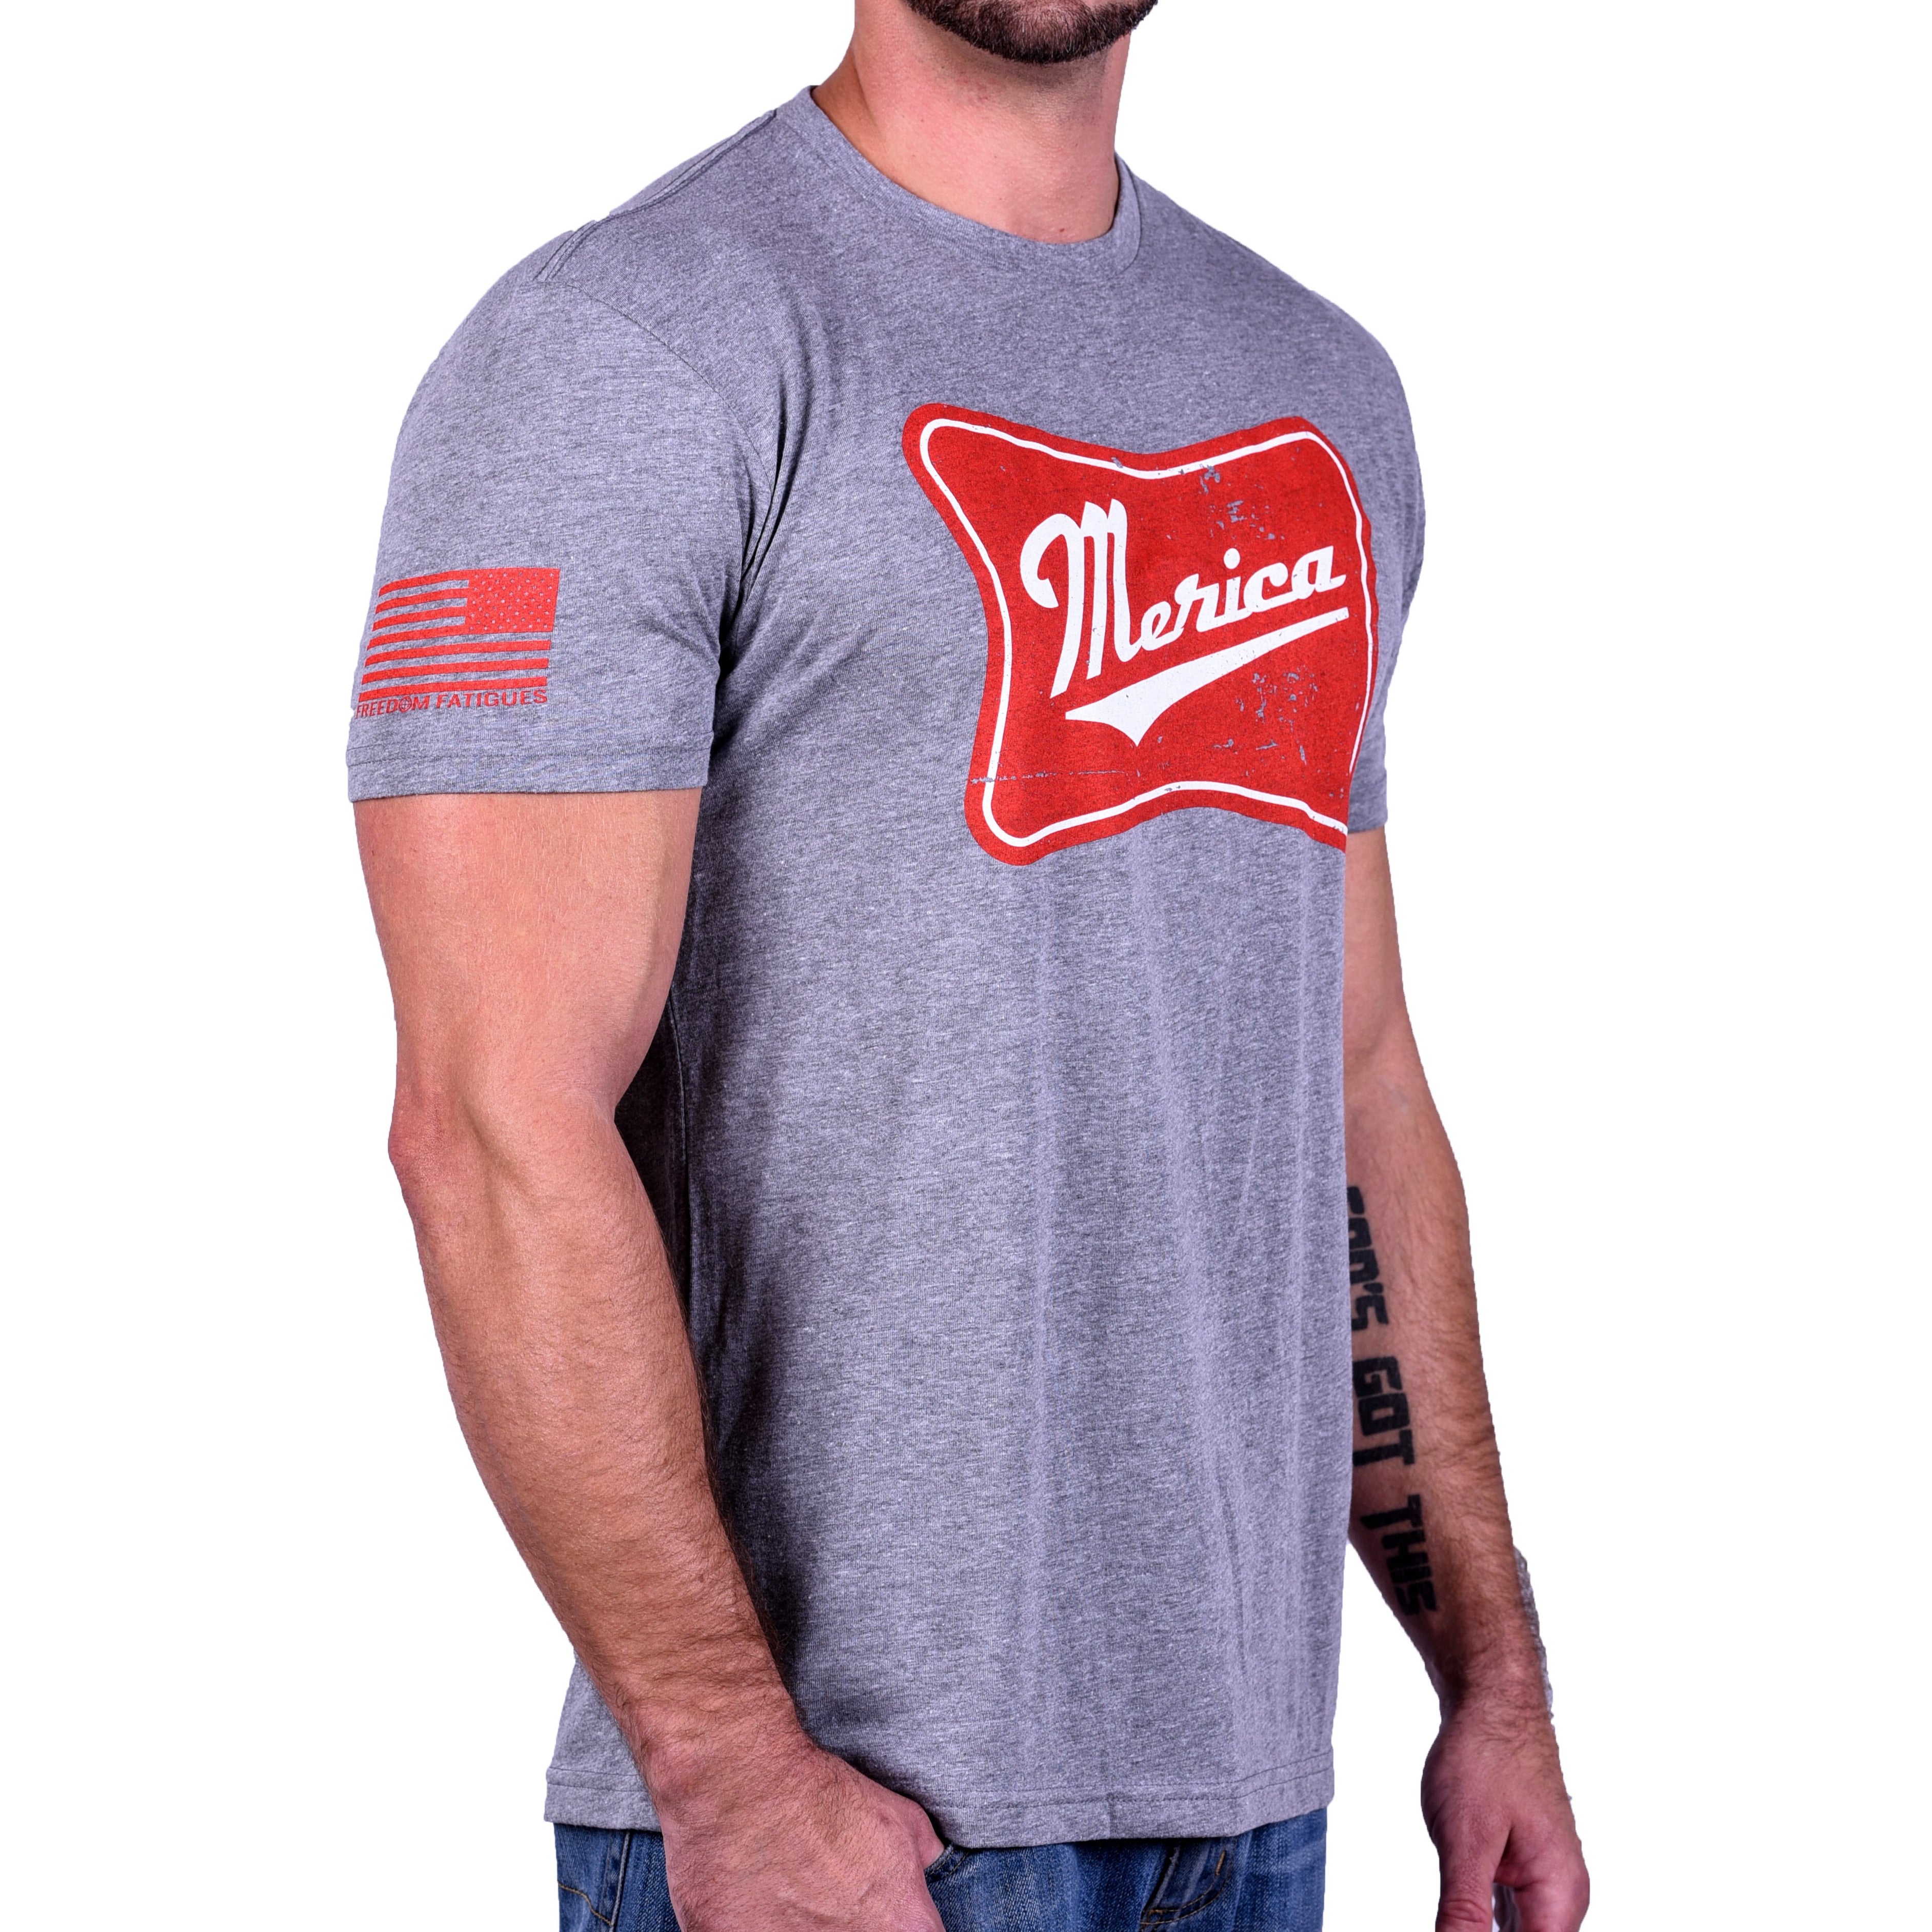 Men's ‘Merica Patriotic T-Shirt